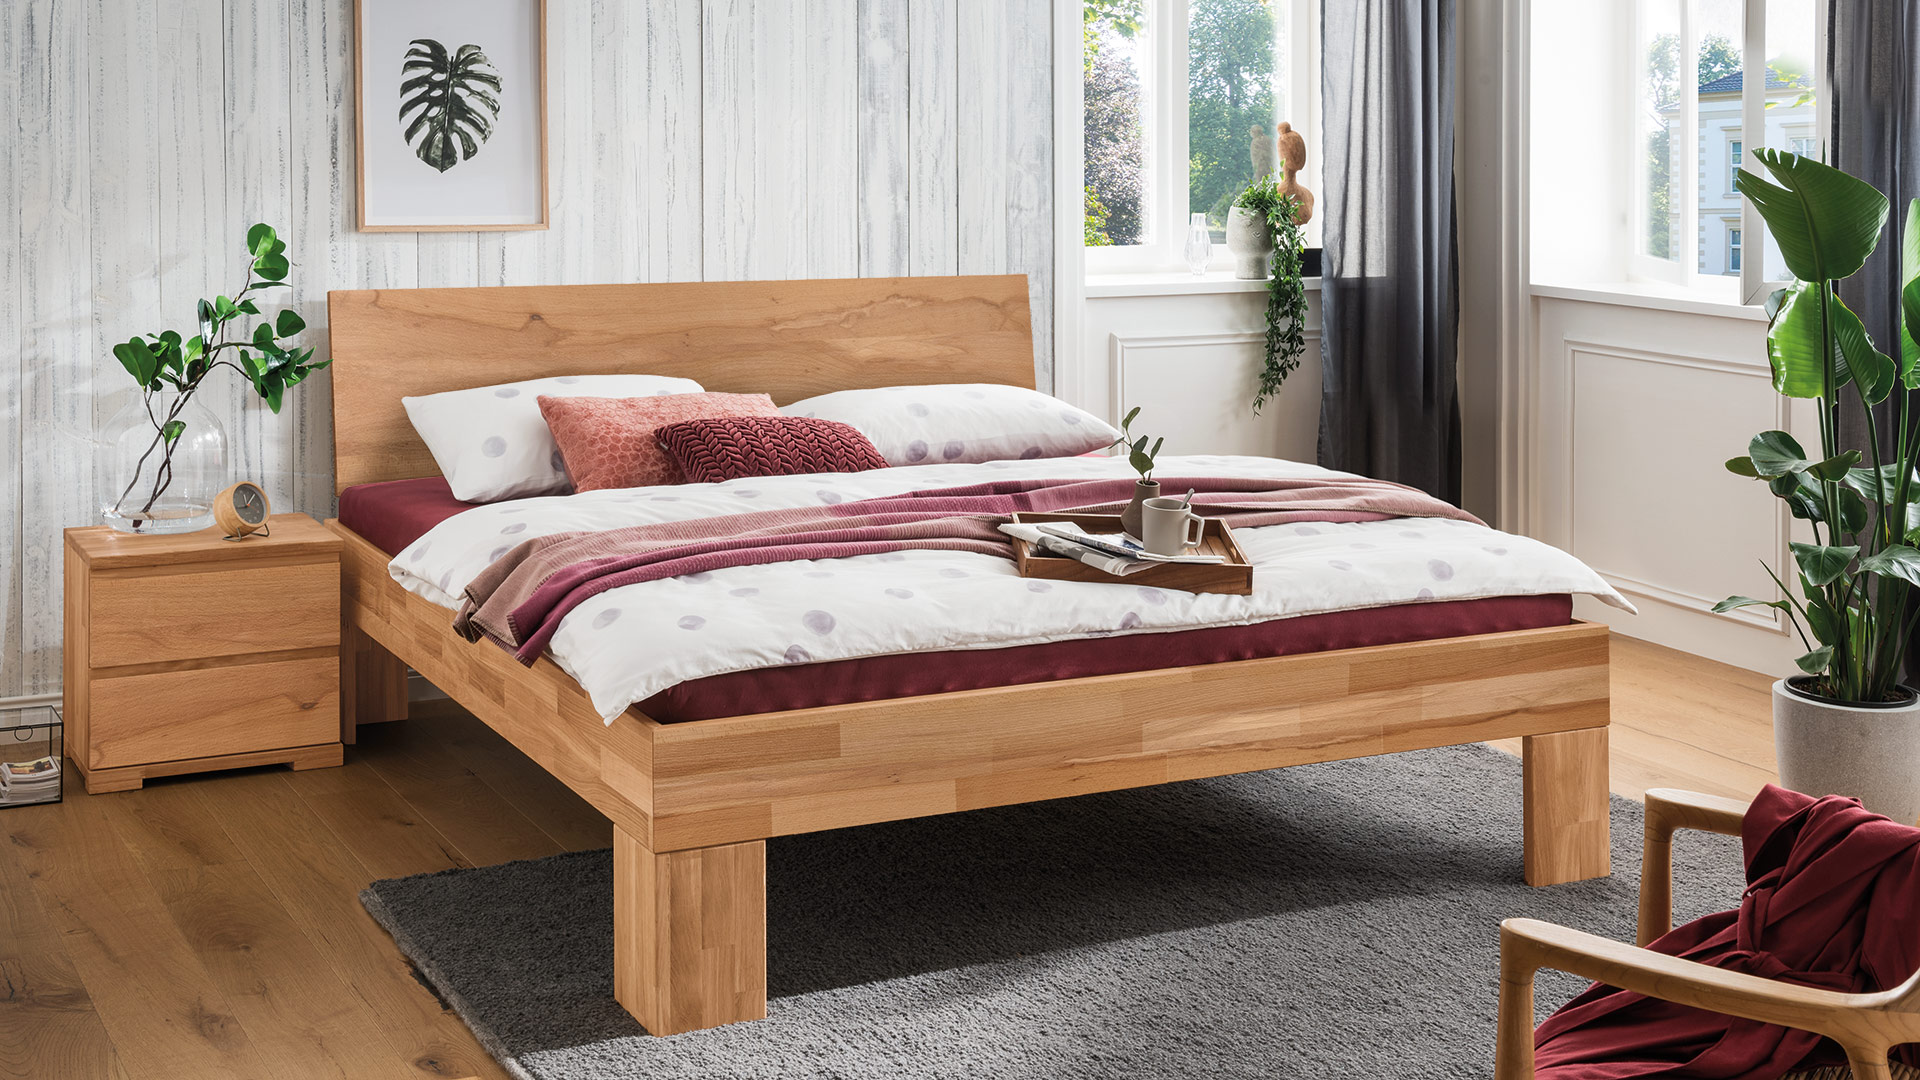 kubiek verkorten Ontslag Massief houten bed "Cepo" | allnatura Nederland